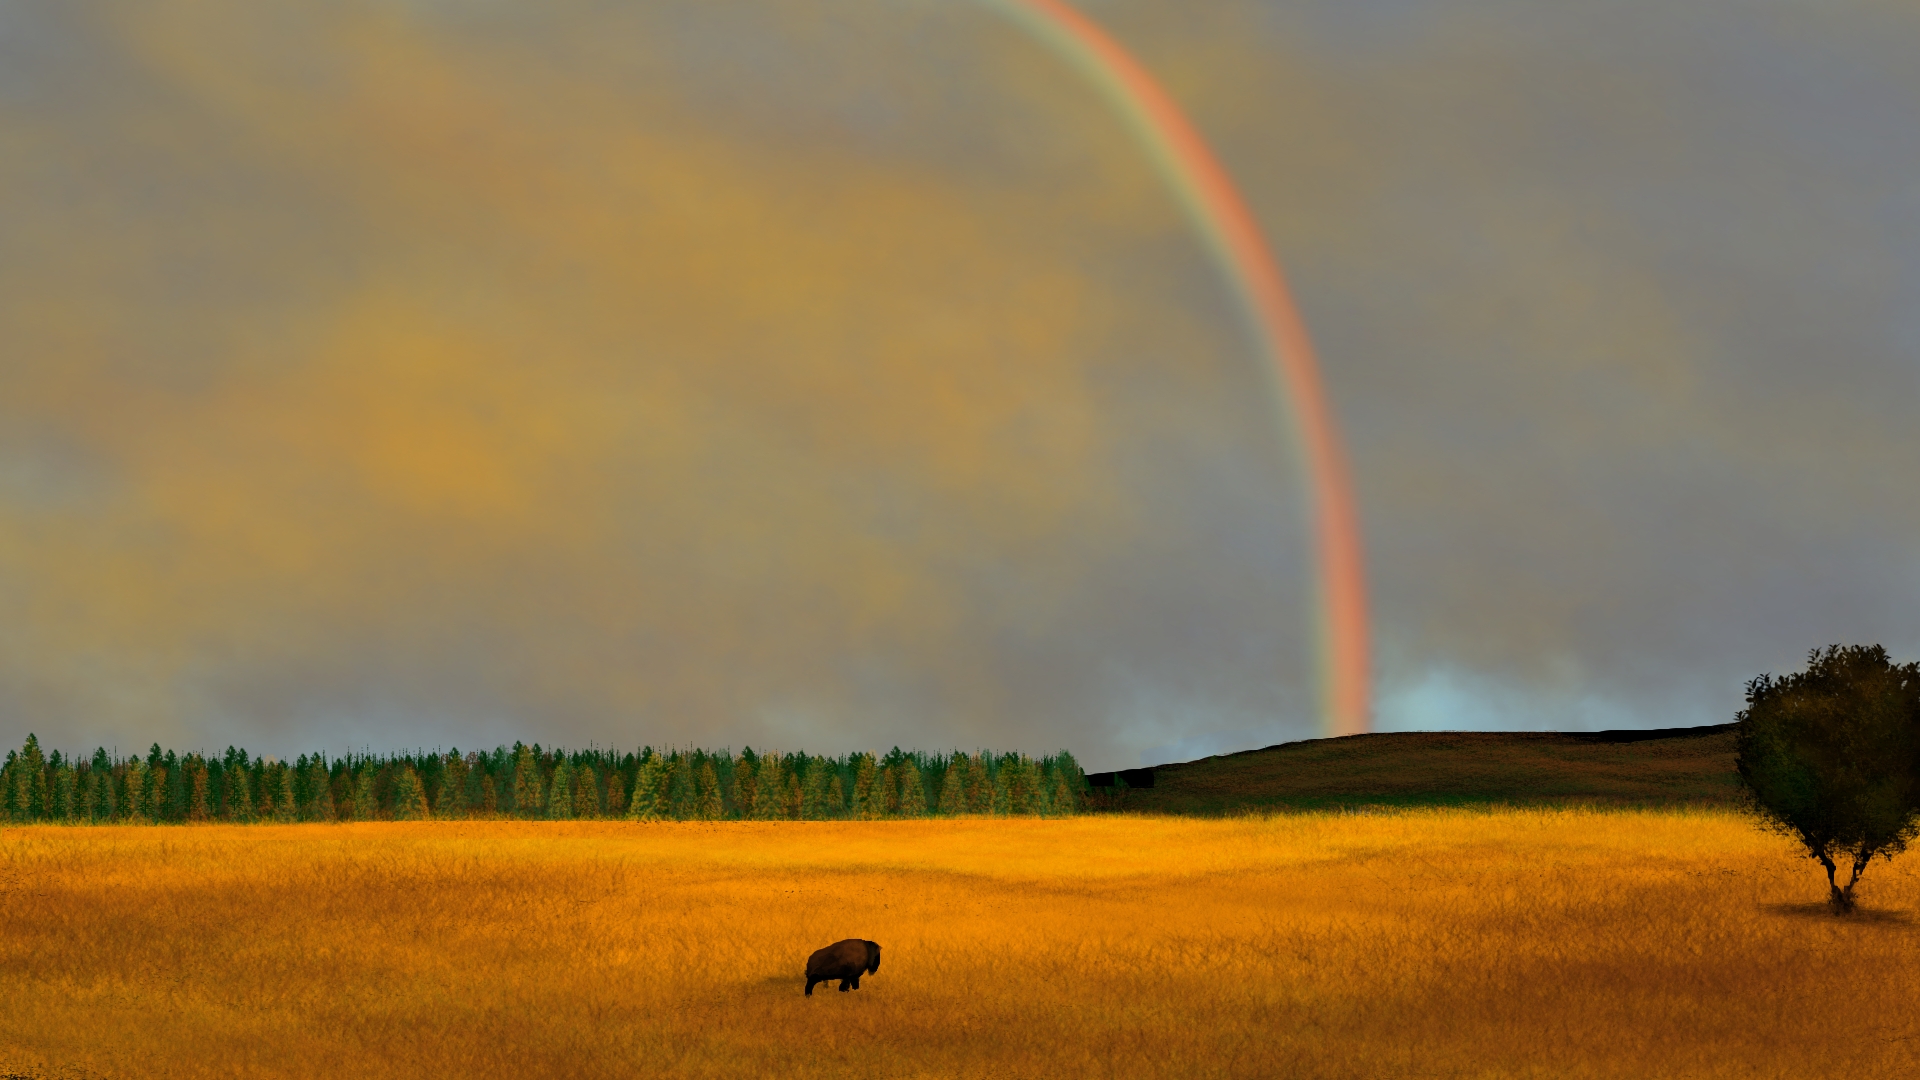 General 1920x1080 digital painting digital art nature landscape buffalo rainbows trees animals field